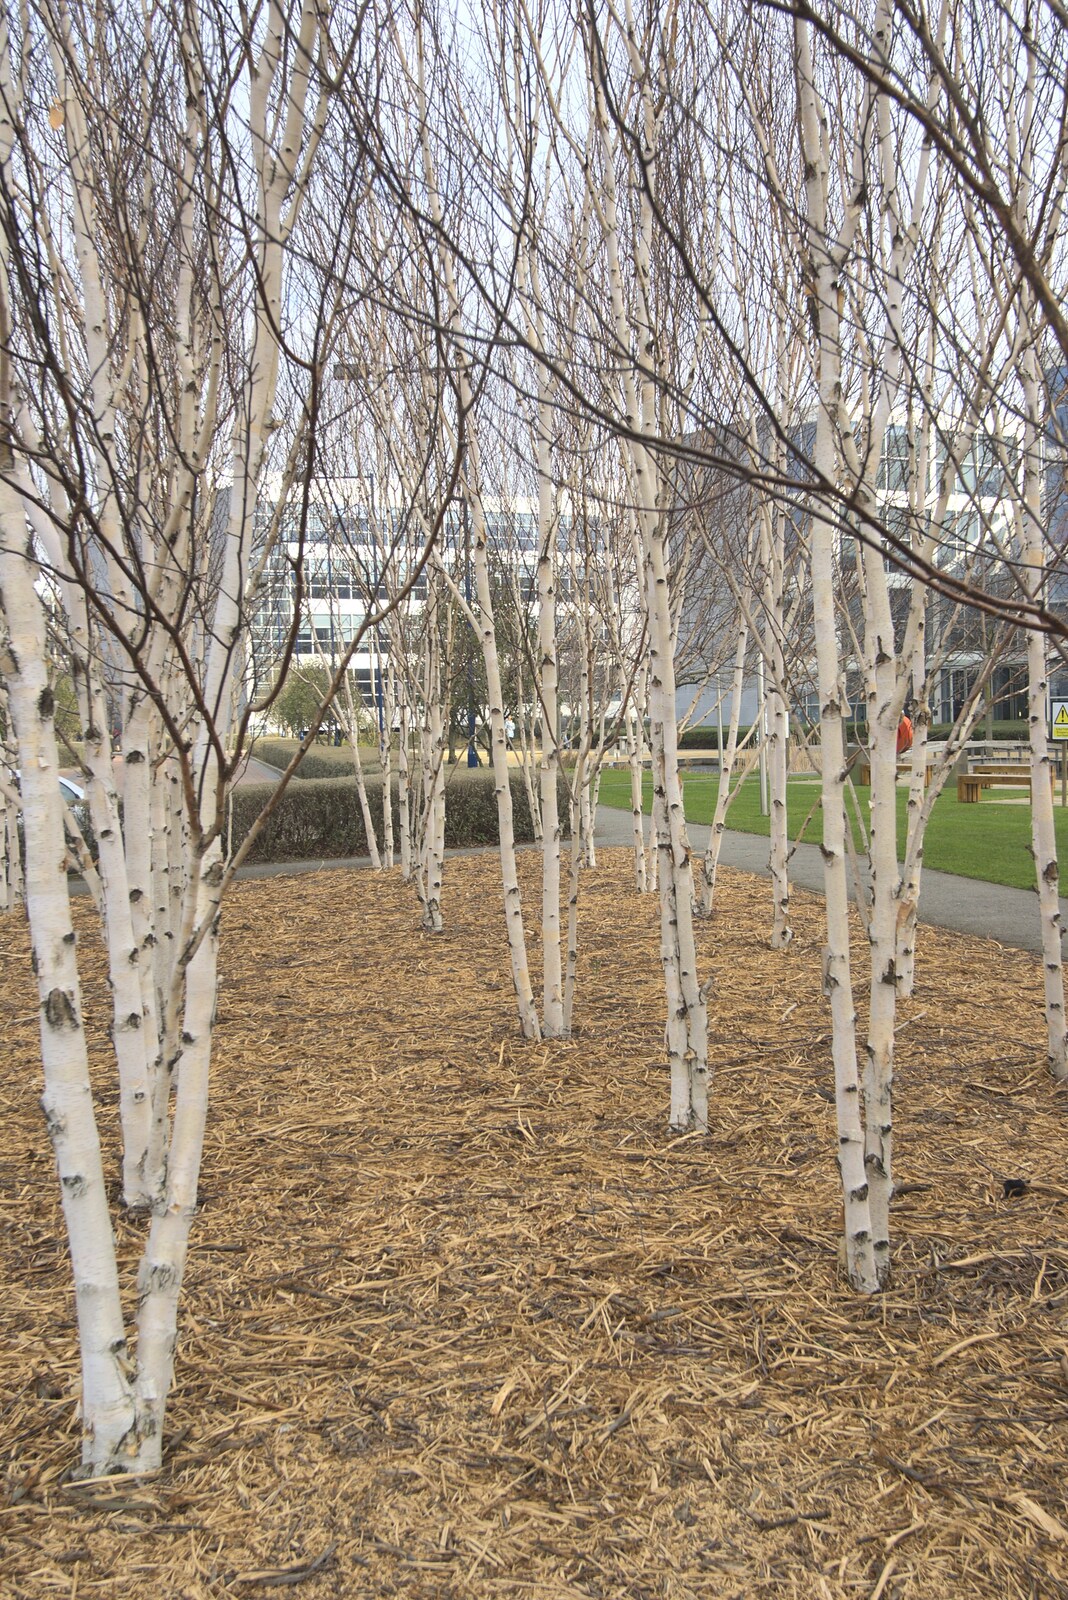 Bare Silver Birch trees from A Week in Monkstown, County Dublin, Ireland - 1st March 2011